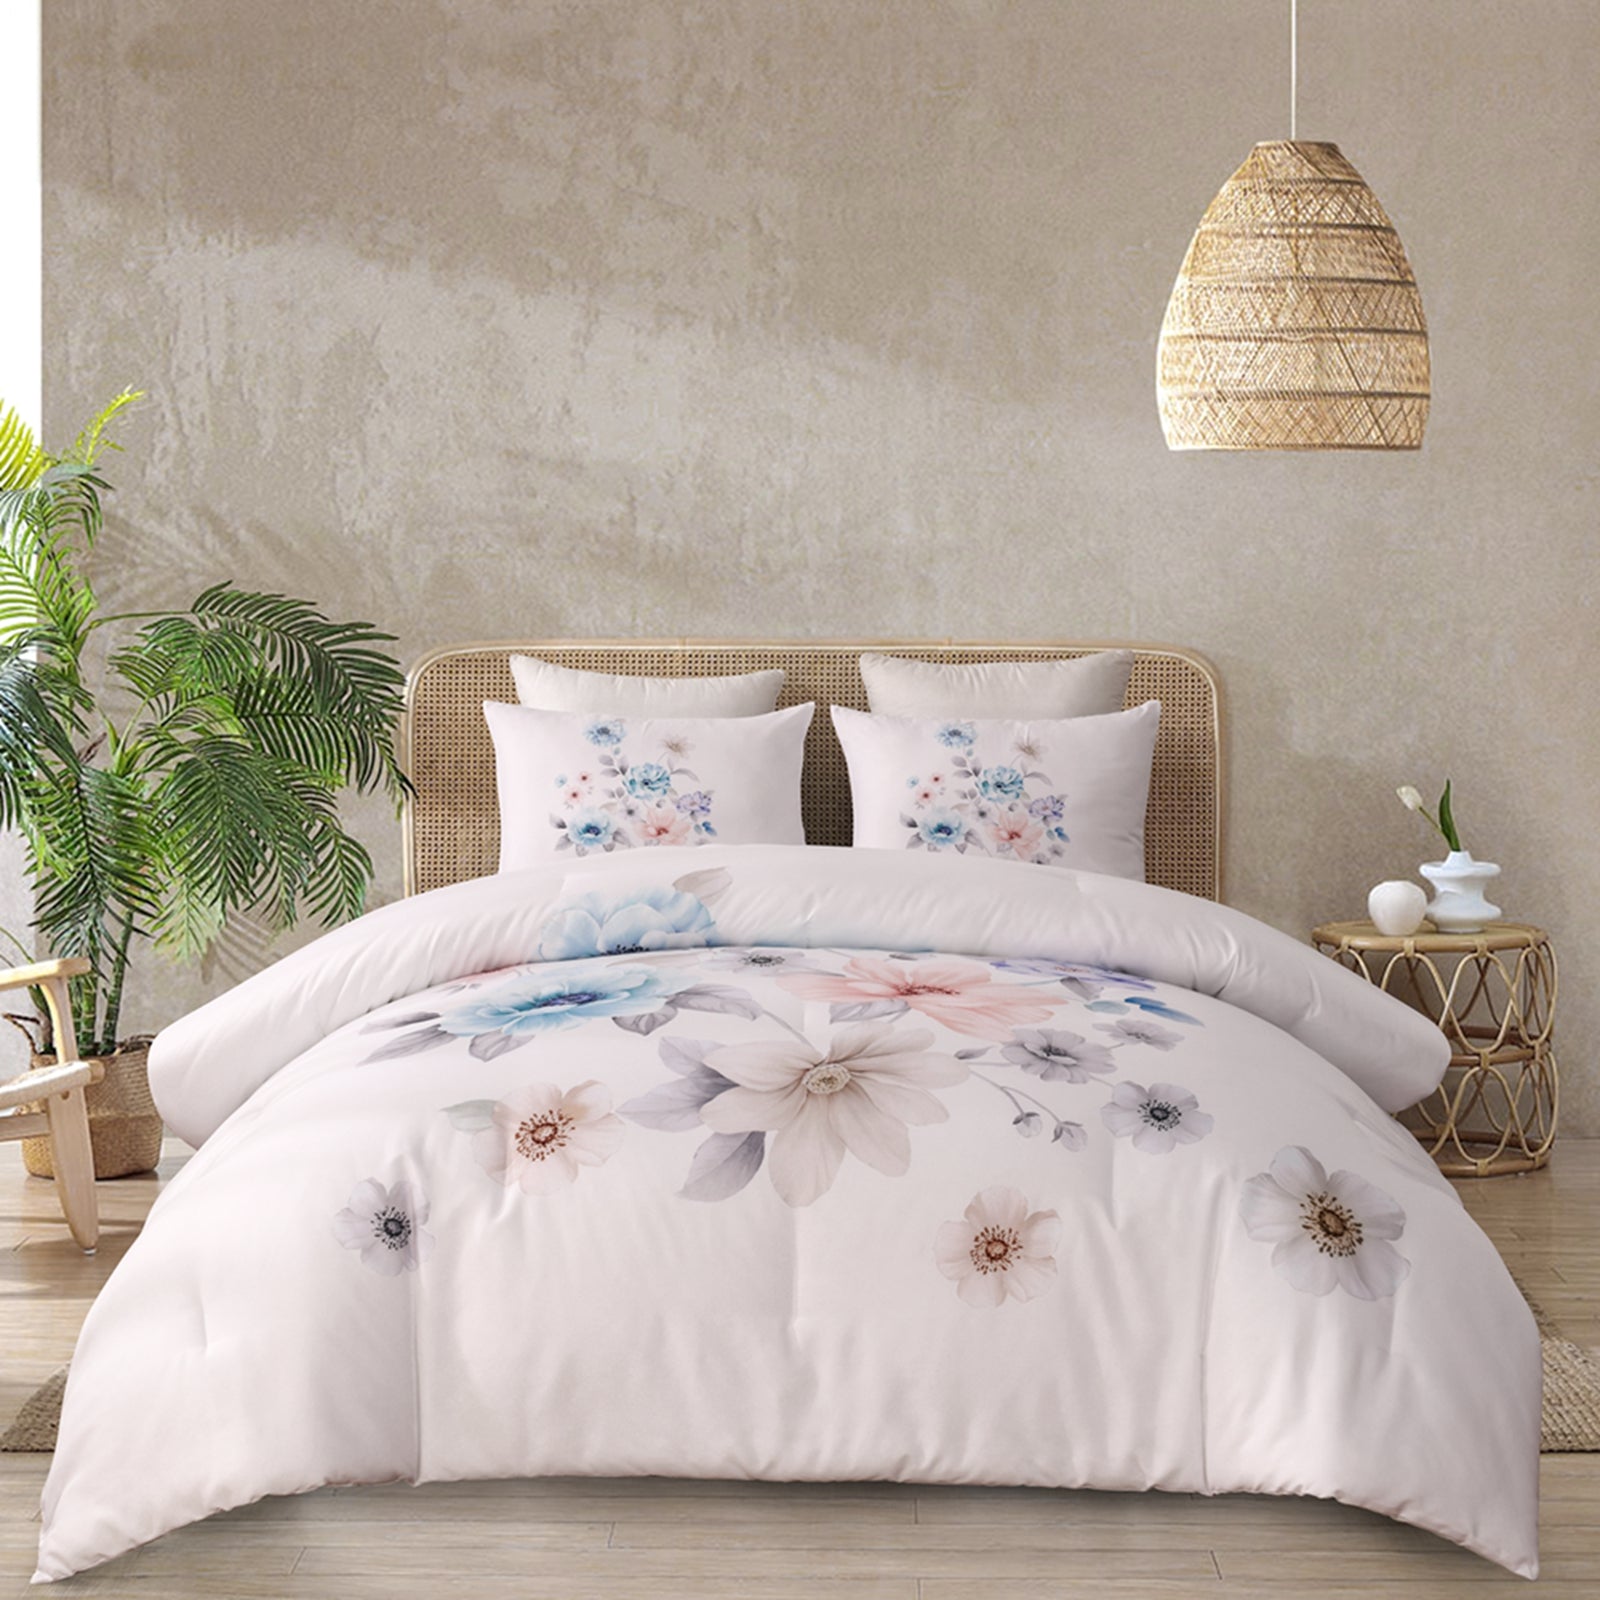 Shatex 3 Piece Comforter Bedding Set- All Season Bedding Comforter Set, Ultra Soft Polyester Flowers Printing Bedding Comforters